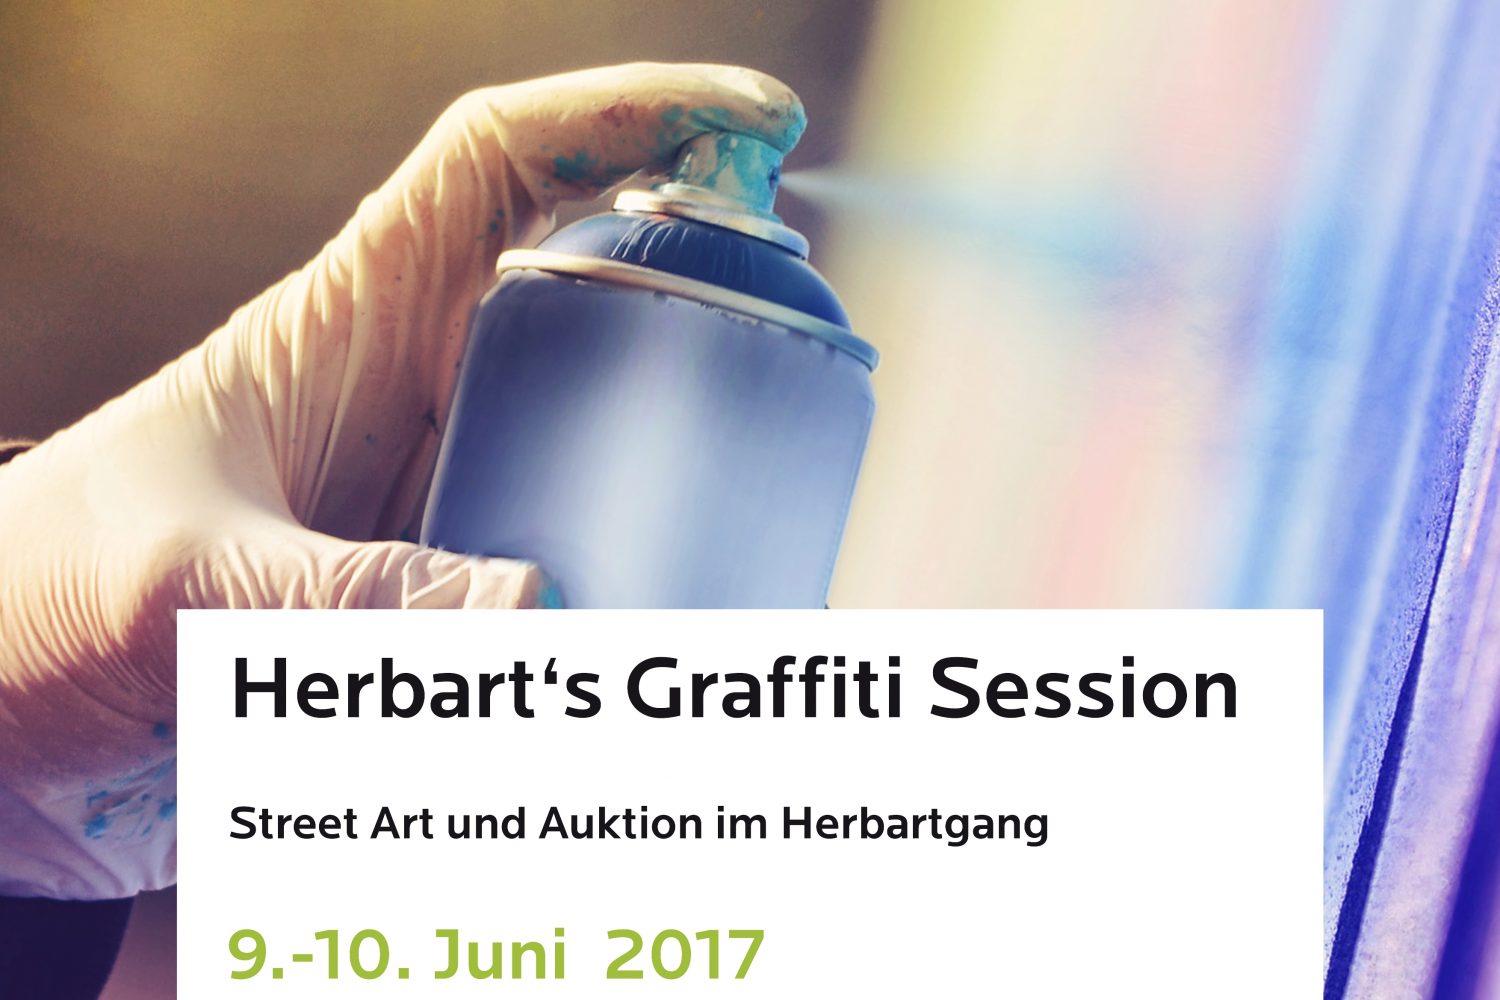 Herbart's Graffiti Session